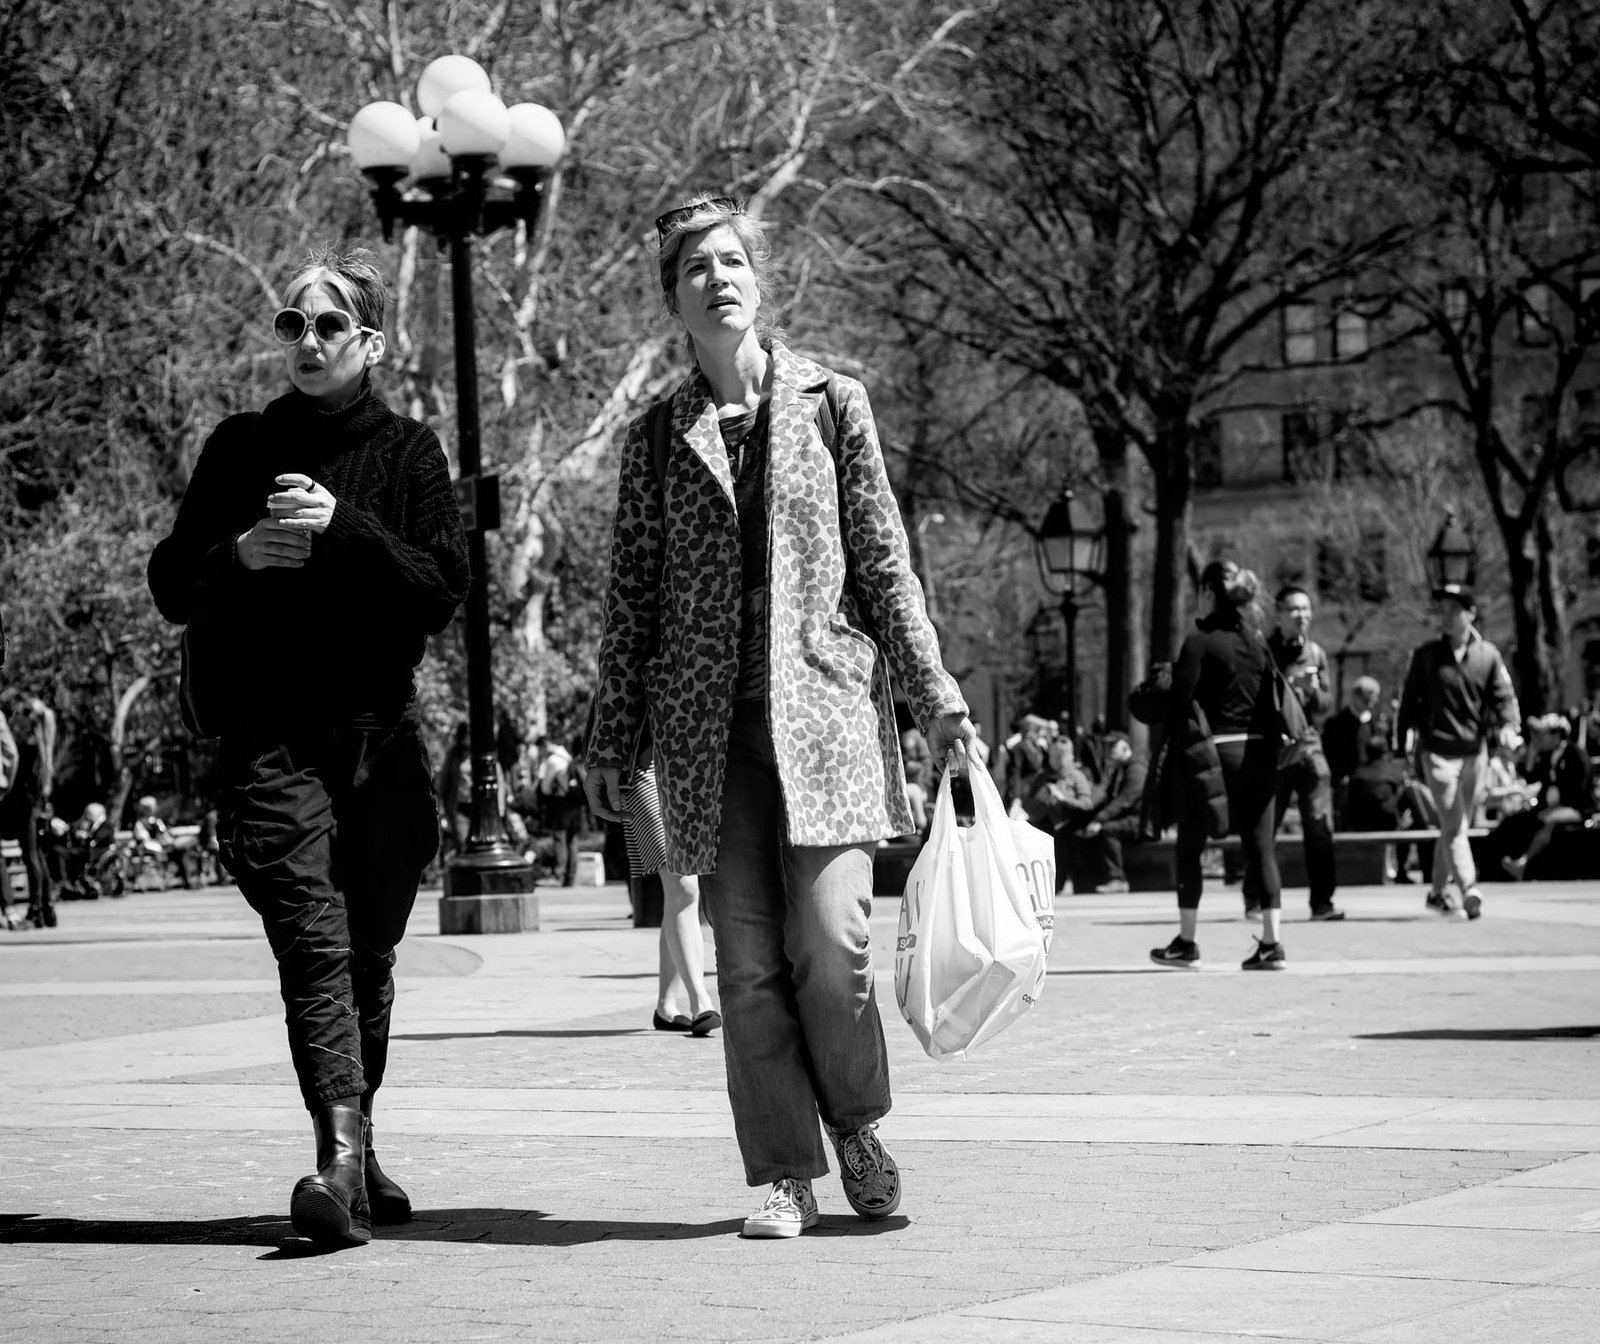 Washington Square Park in New York. More New York moments in black & white on Urban Pixxels: http://urbanpixxels.com/new-york-bw 